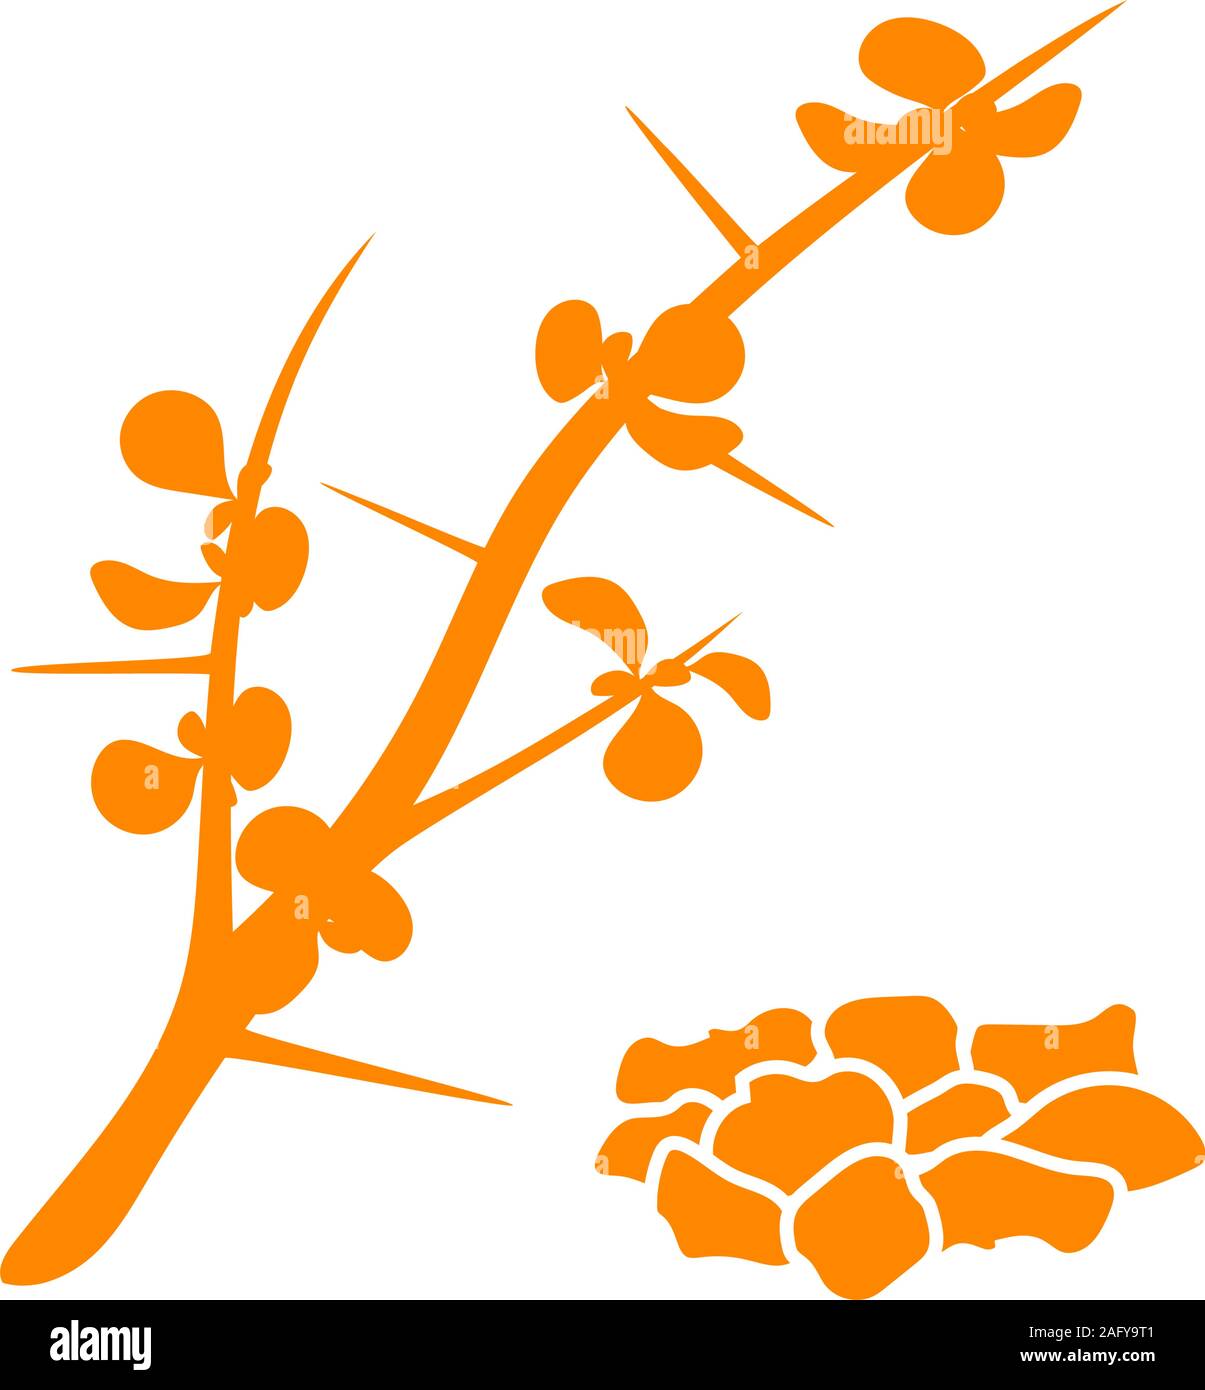 La mirra o africano mirra, o erboristico mirra, o myrrhor somalo, o comune mirra - pianta aromatica. Illustrazione Vettoriale Illustrazione Vettoriale